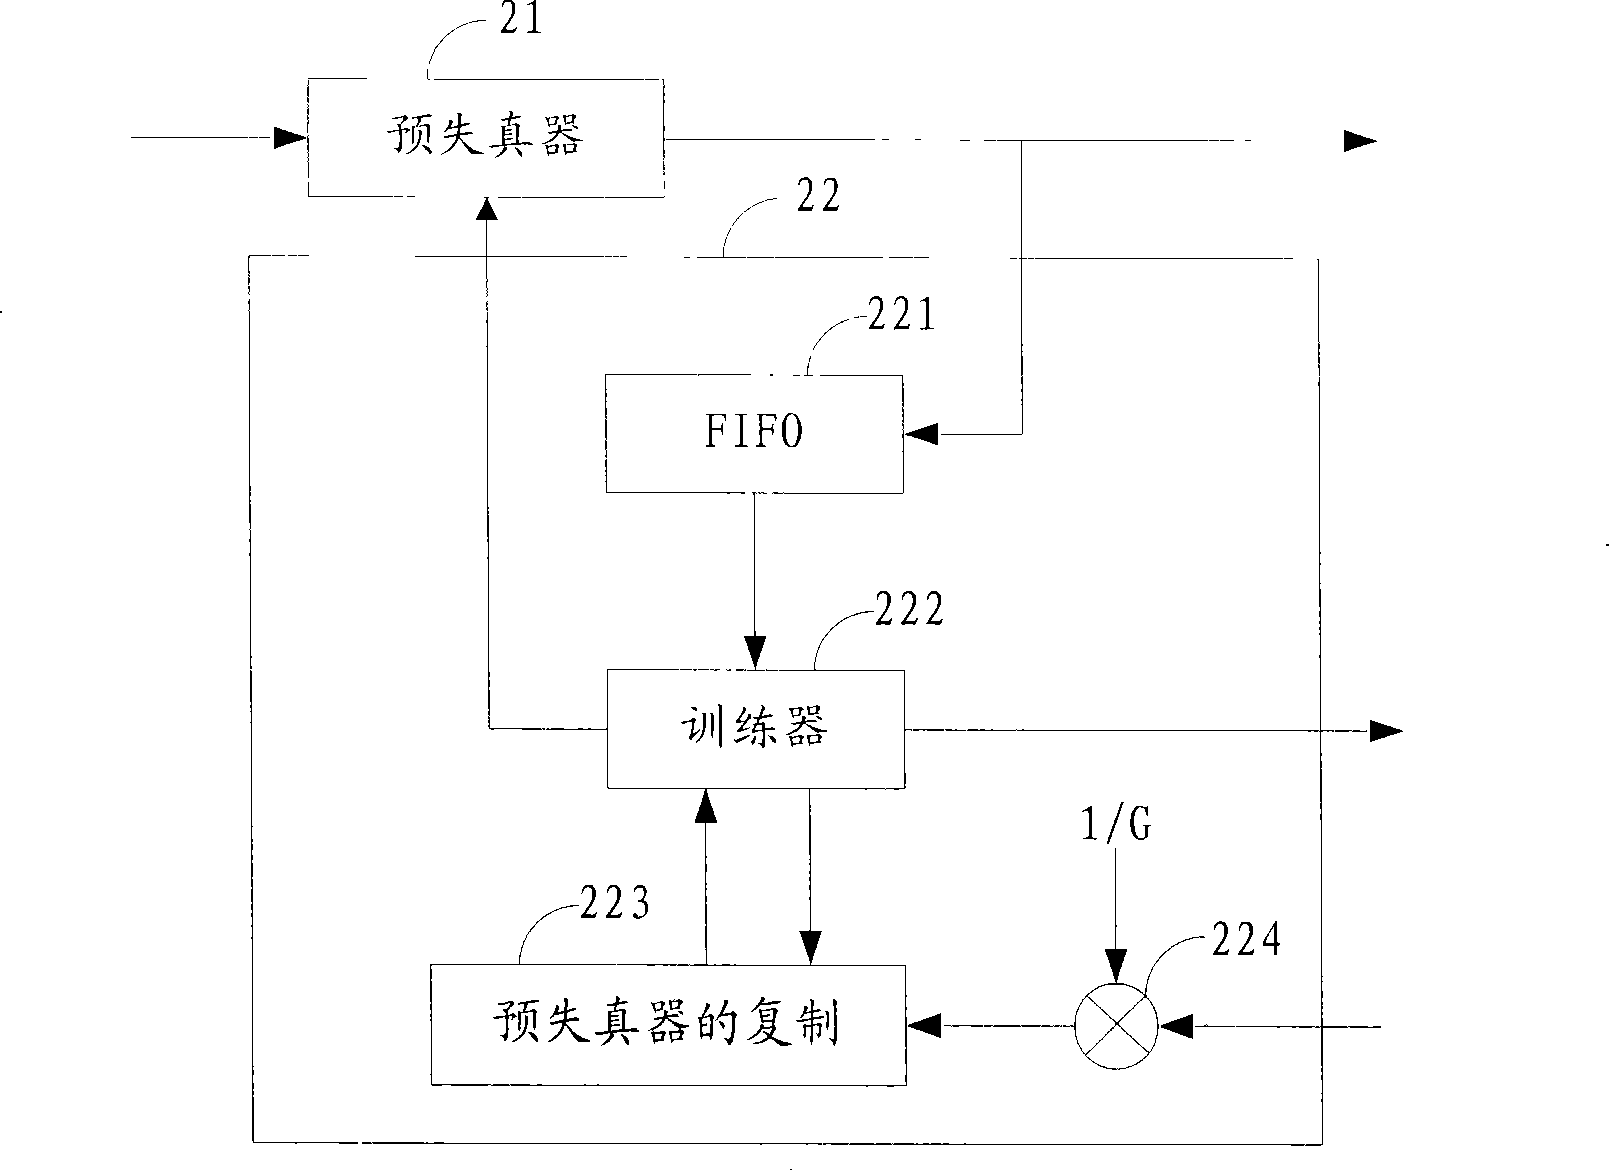 Base band adaptive digital predistortion power amplifier correcting method and system